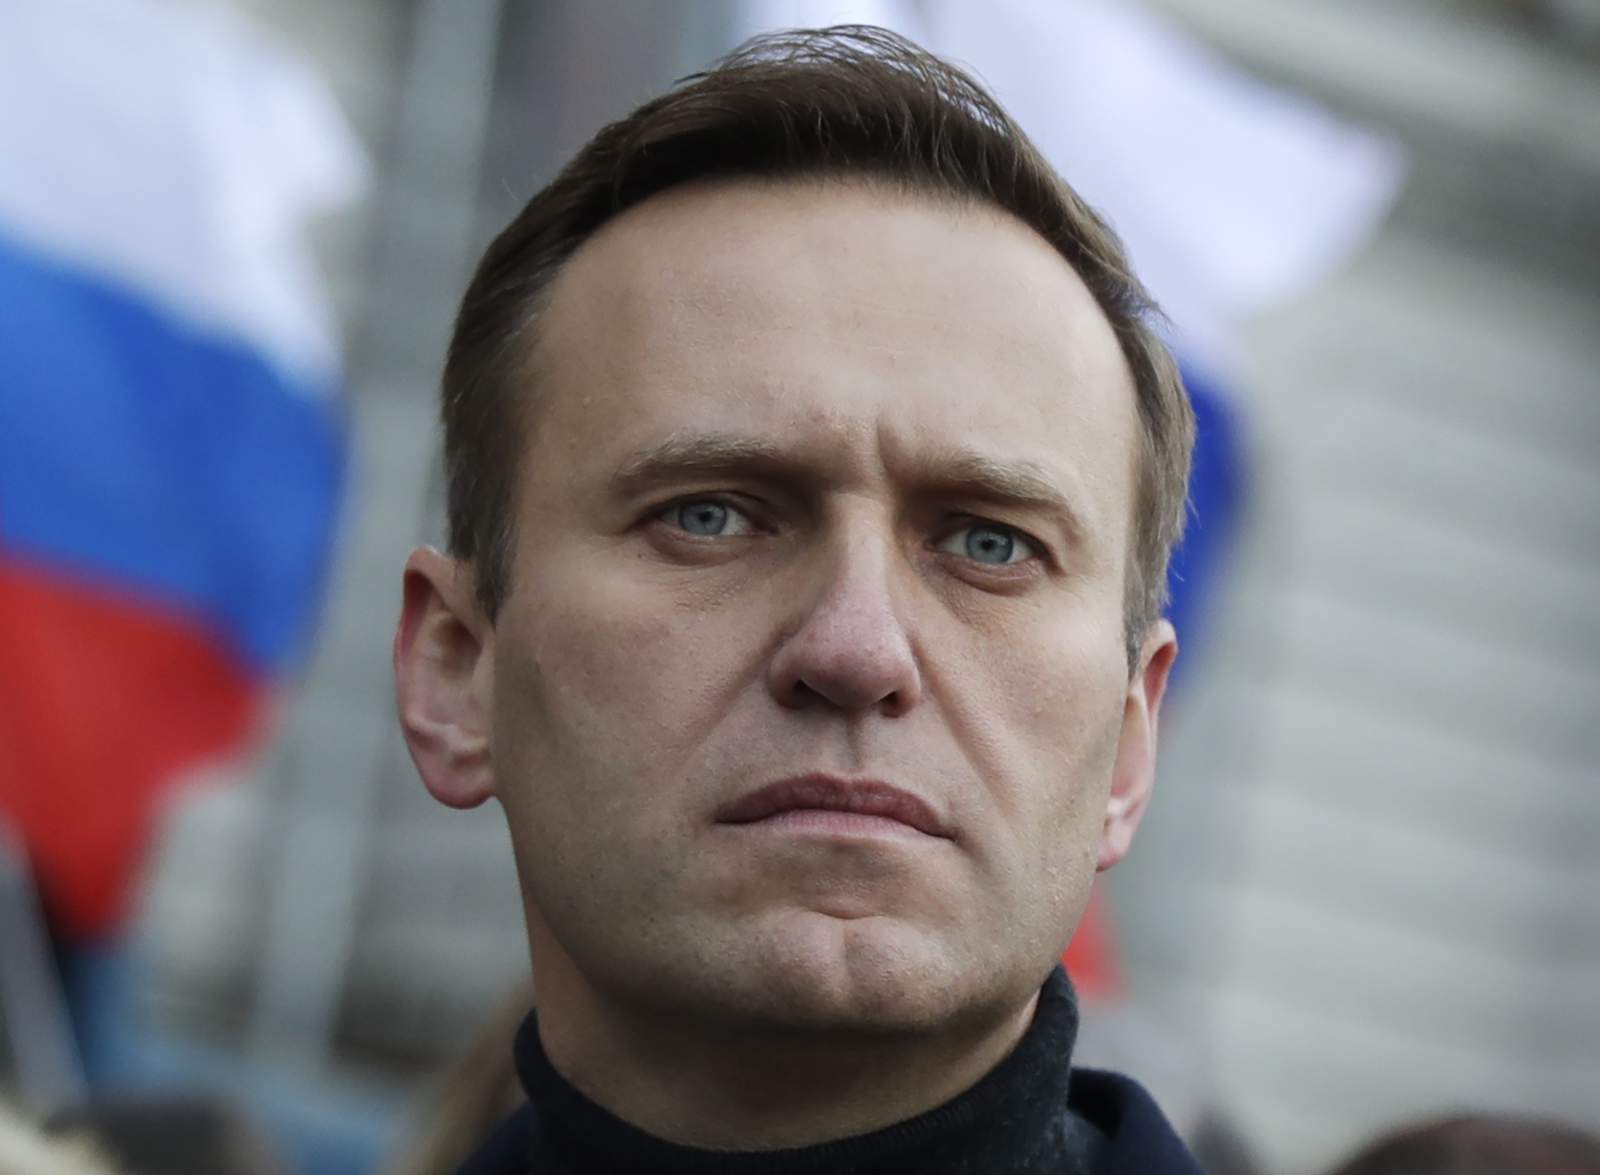 Germany's Merkel: Don't link Navalny case to pipeline plan